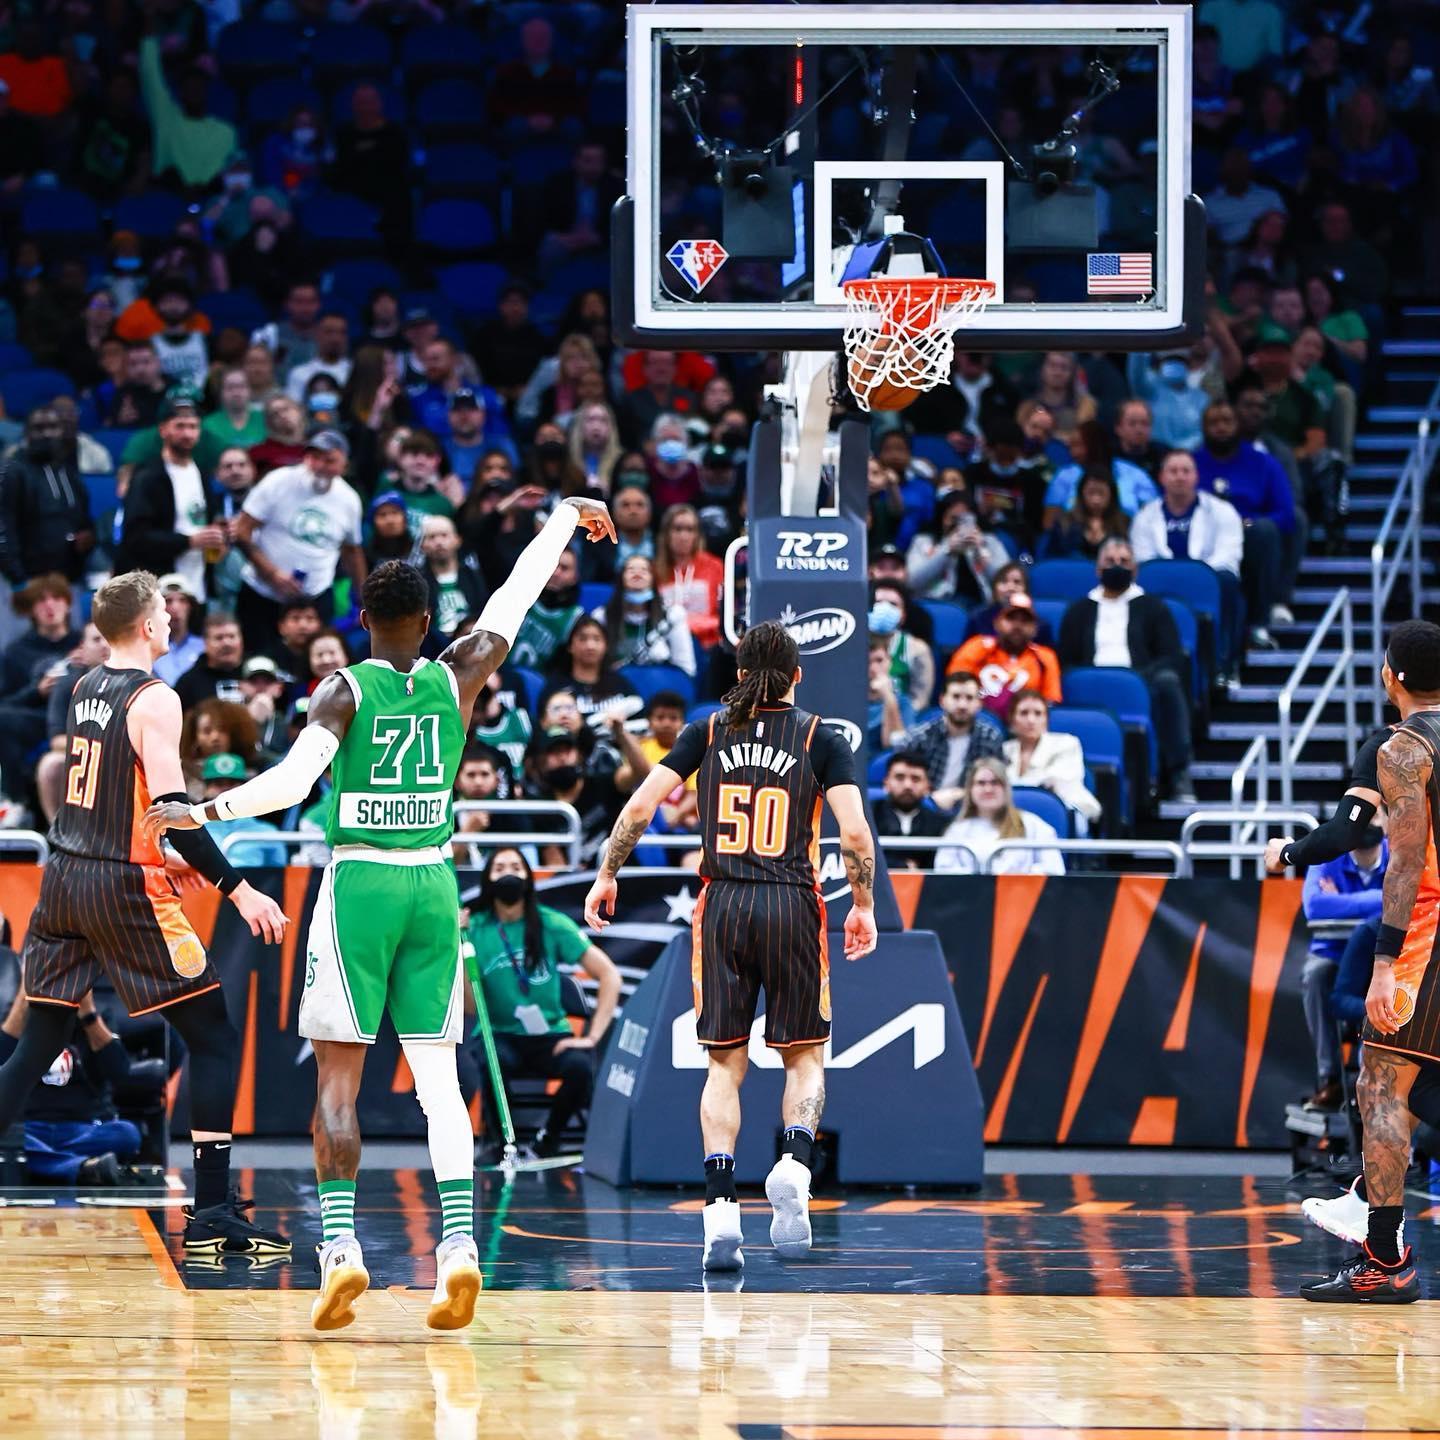 Boston Celtics Basketball. Photo by Instagram user @celtics